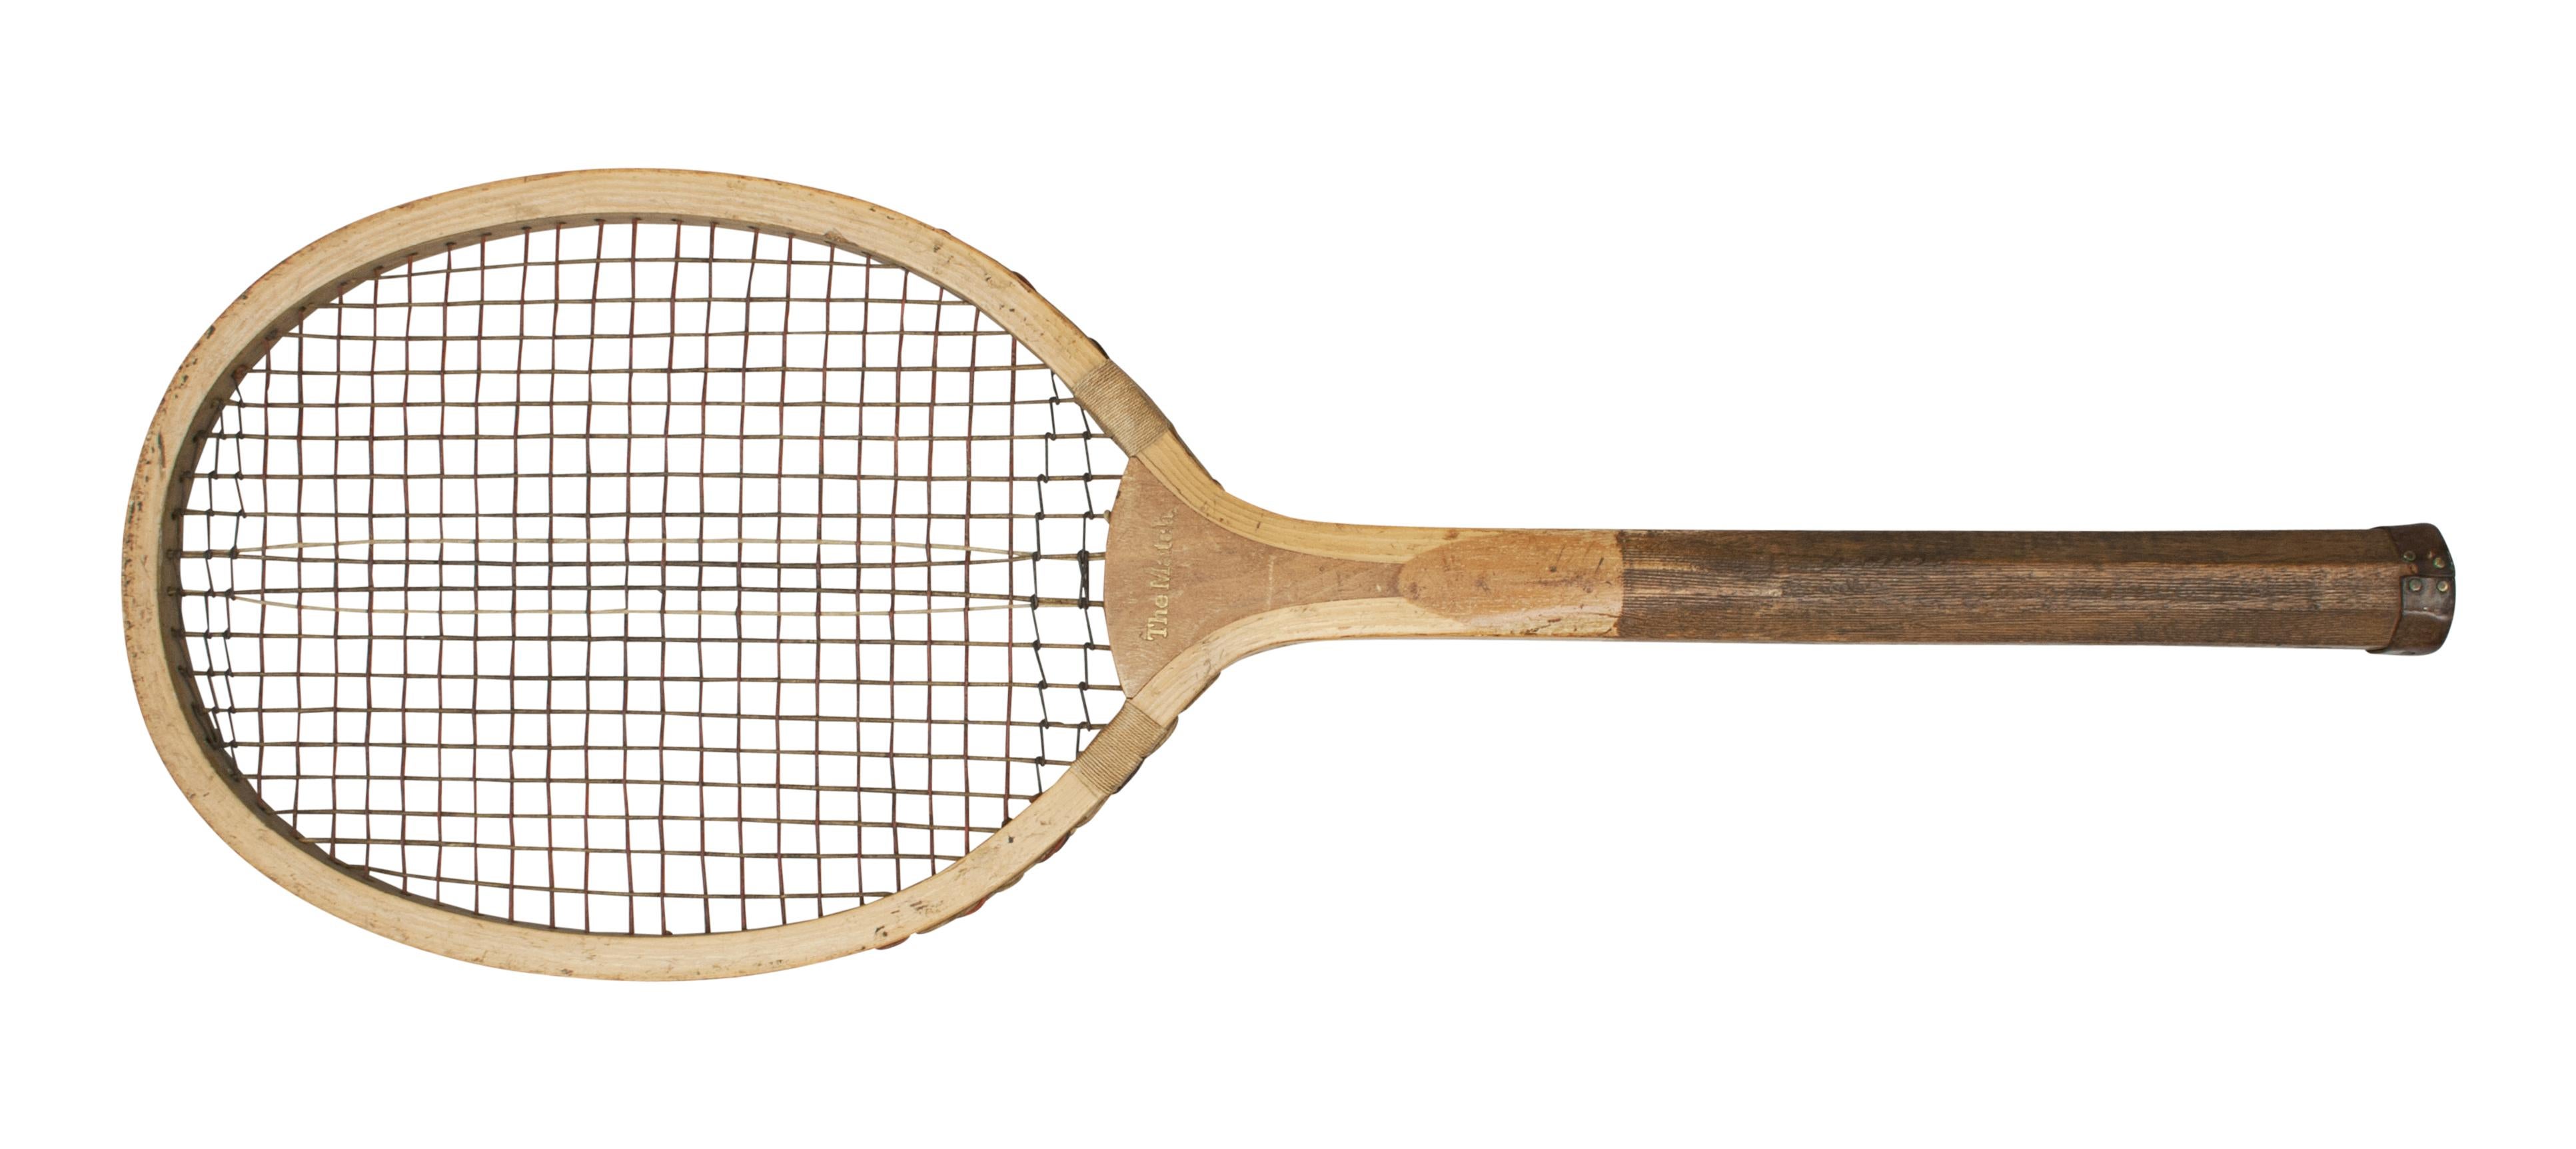 Antique lawn tennis racket, 